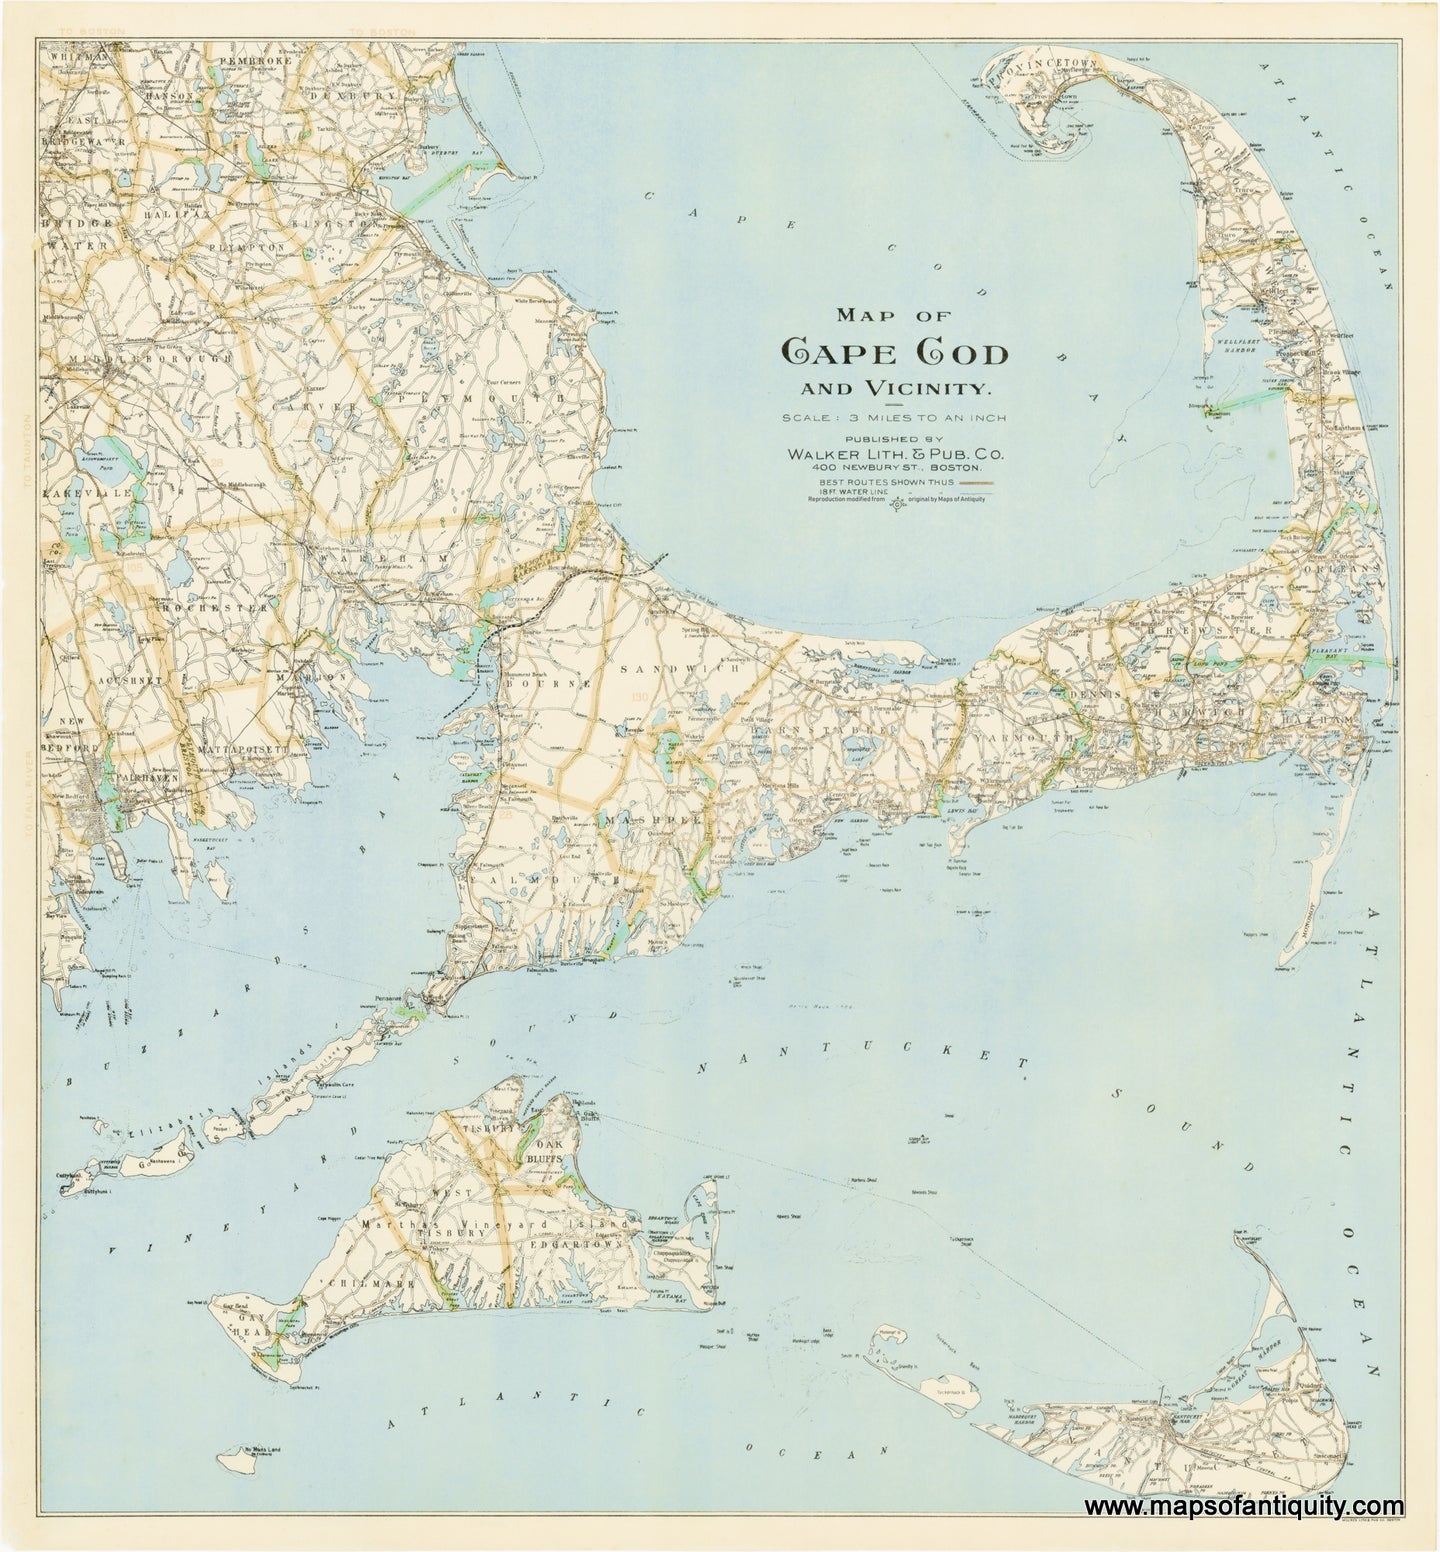 Reproduction-Antique-Map-Cape-Cod-Vicinity-1900s-Walker